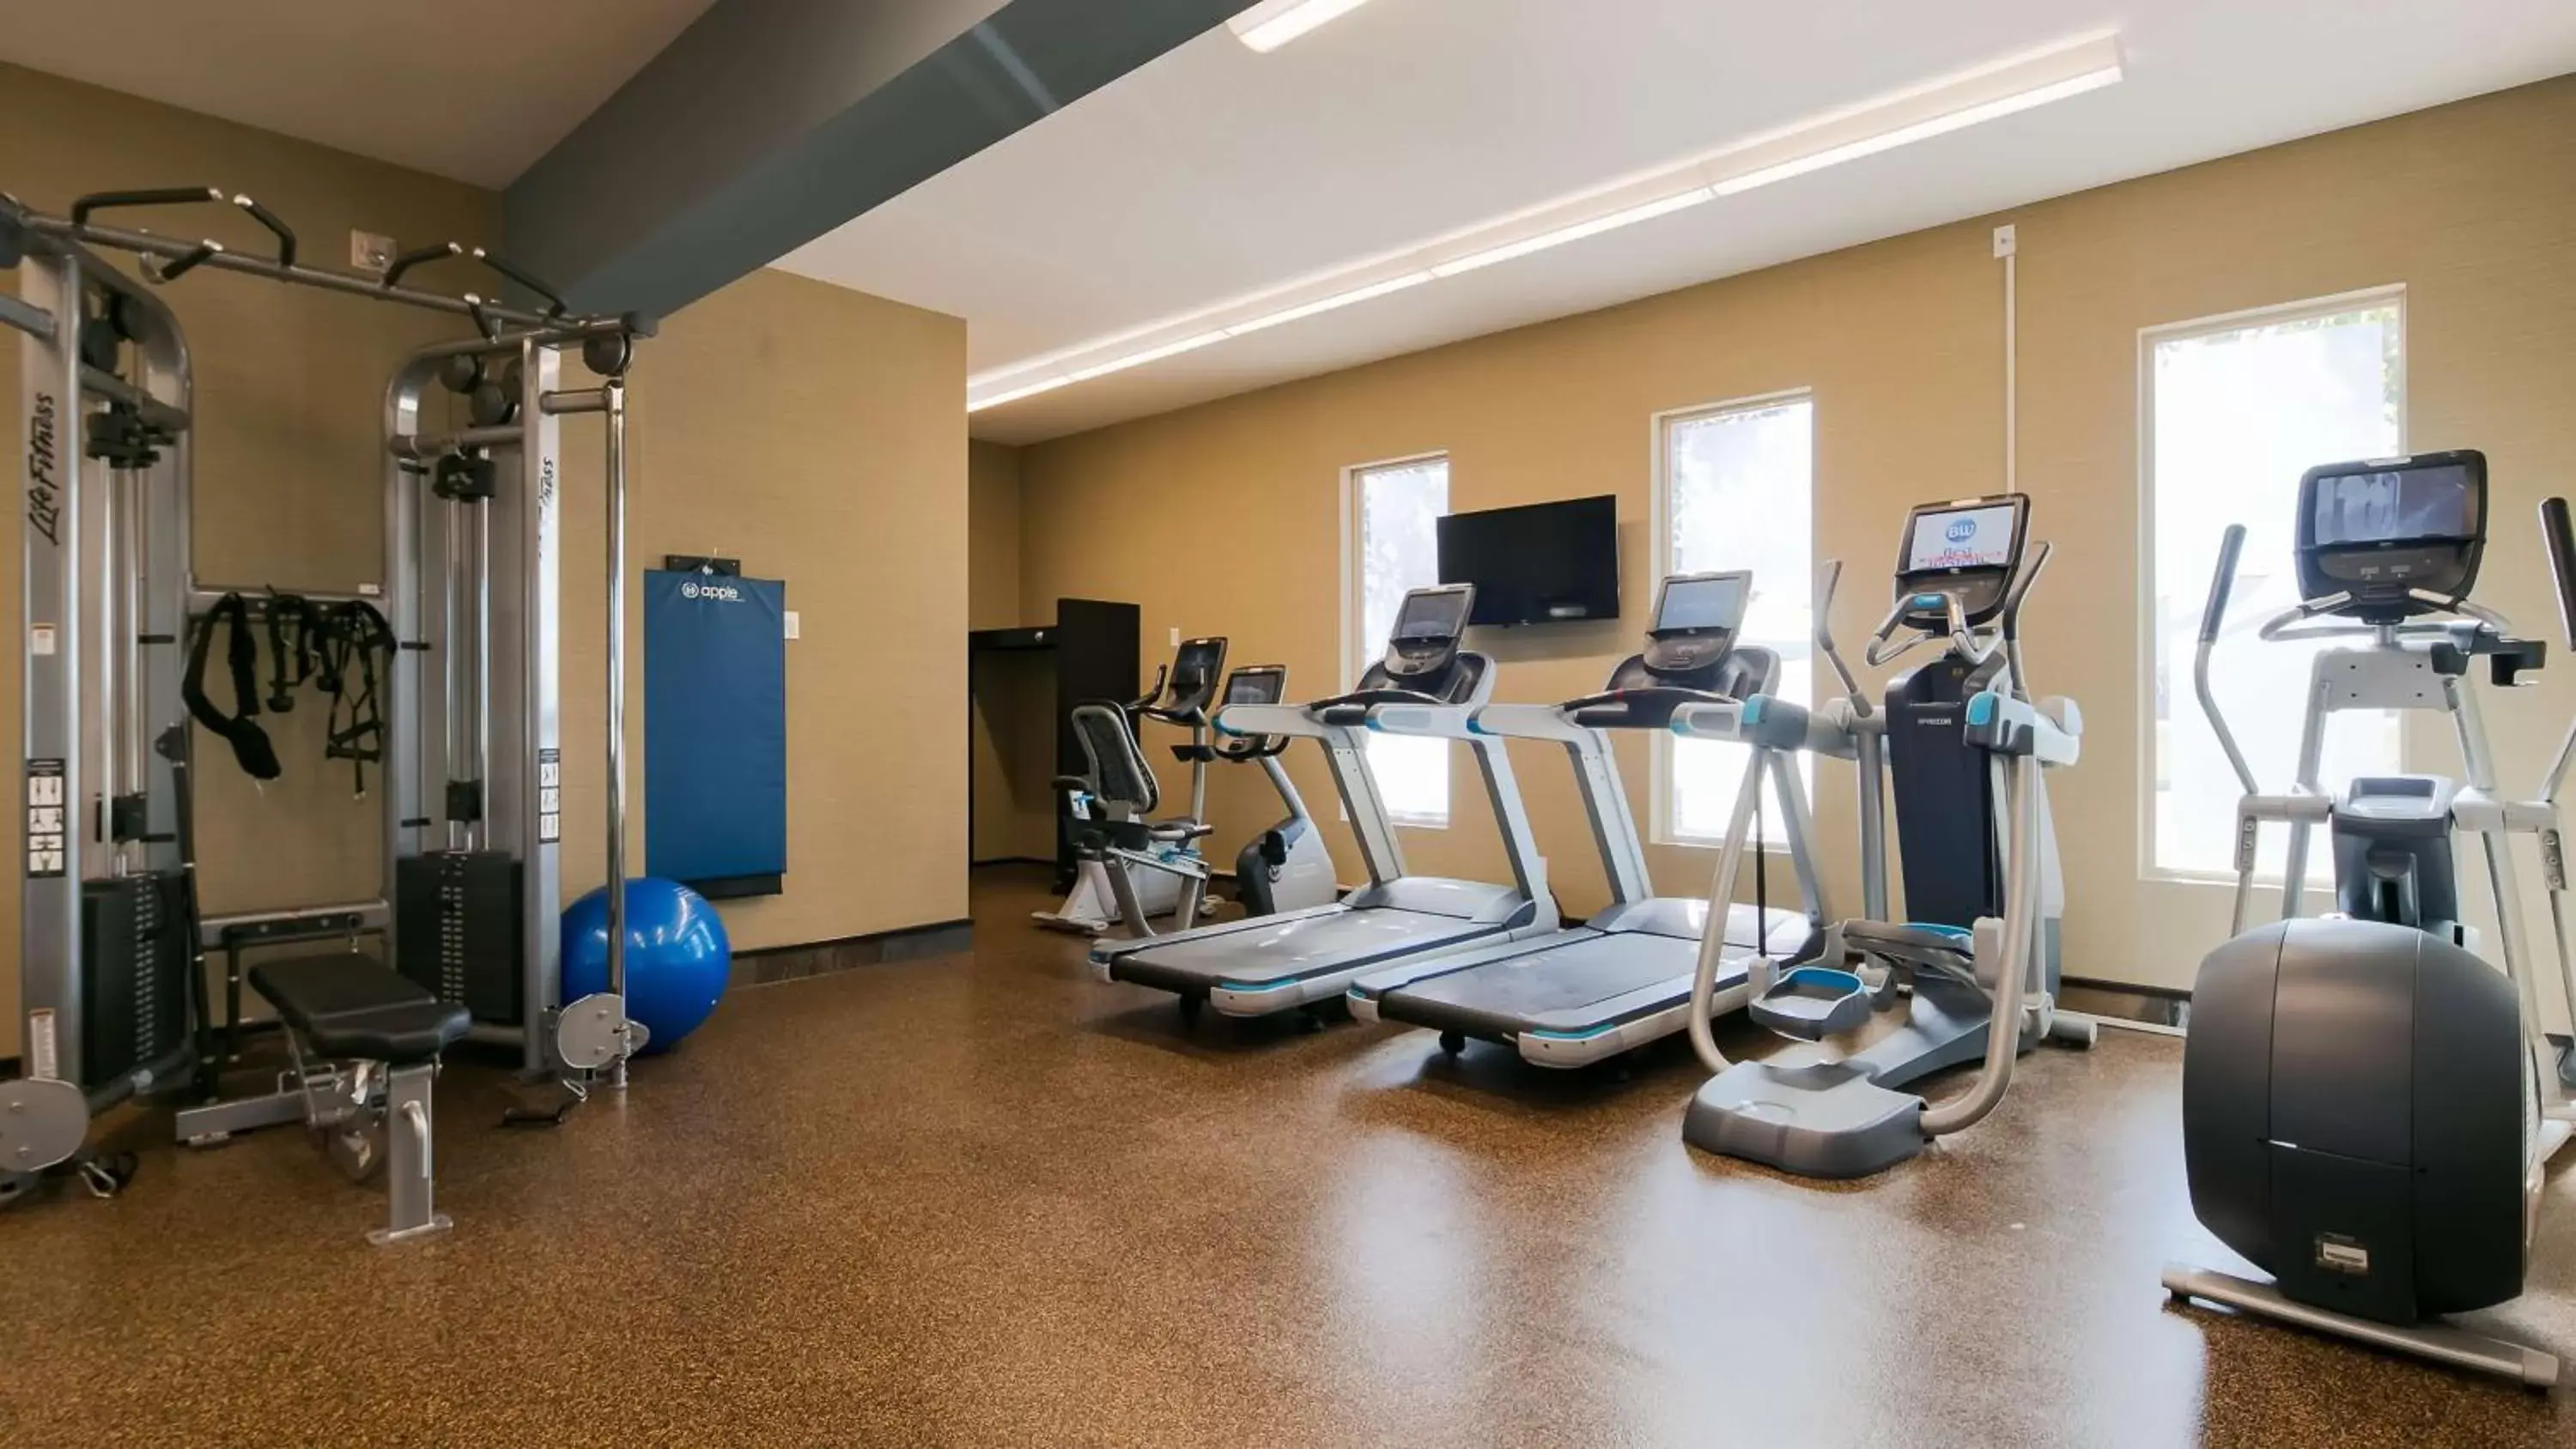 Fitness centre/facilities, Fitness Center/Facilities in Best Western Bonnyville Inn & Suites